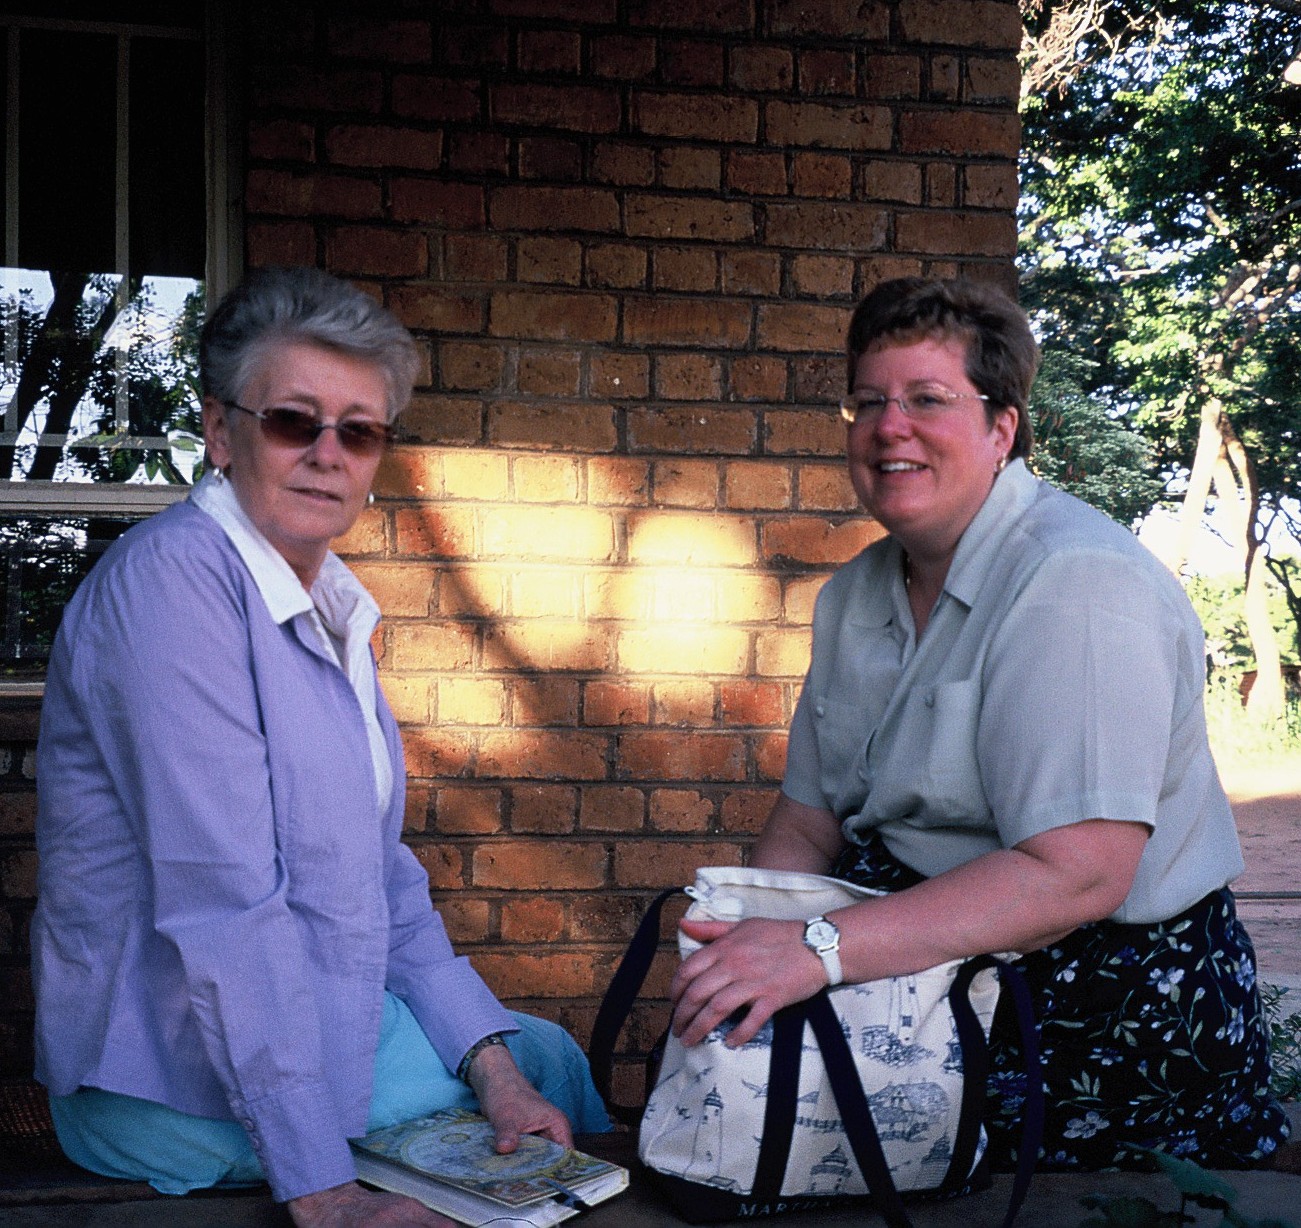 Carol and Linda in malawi on first trip 2006